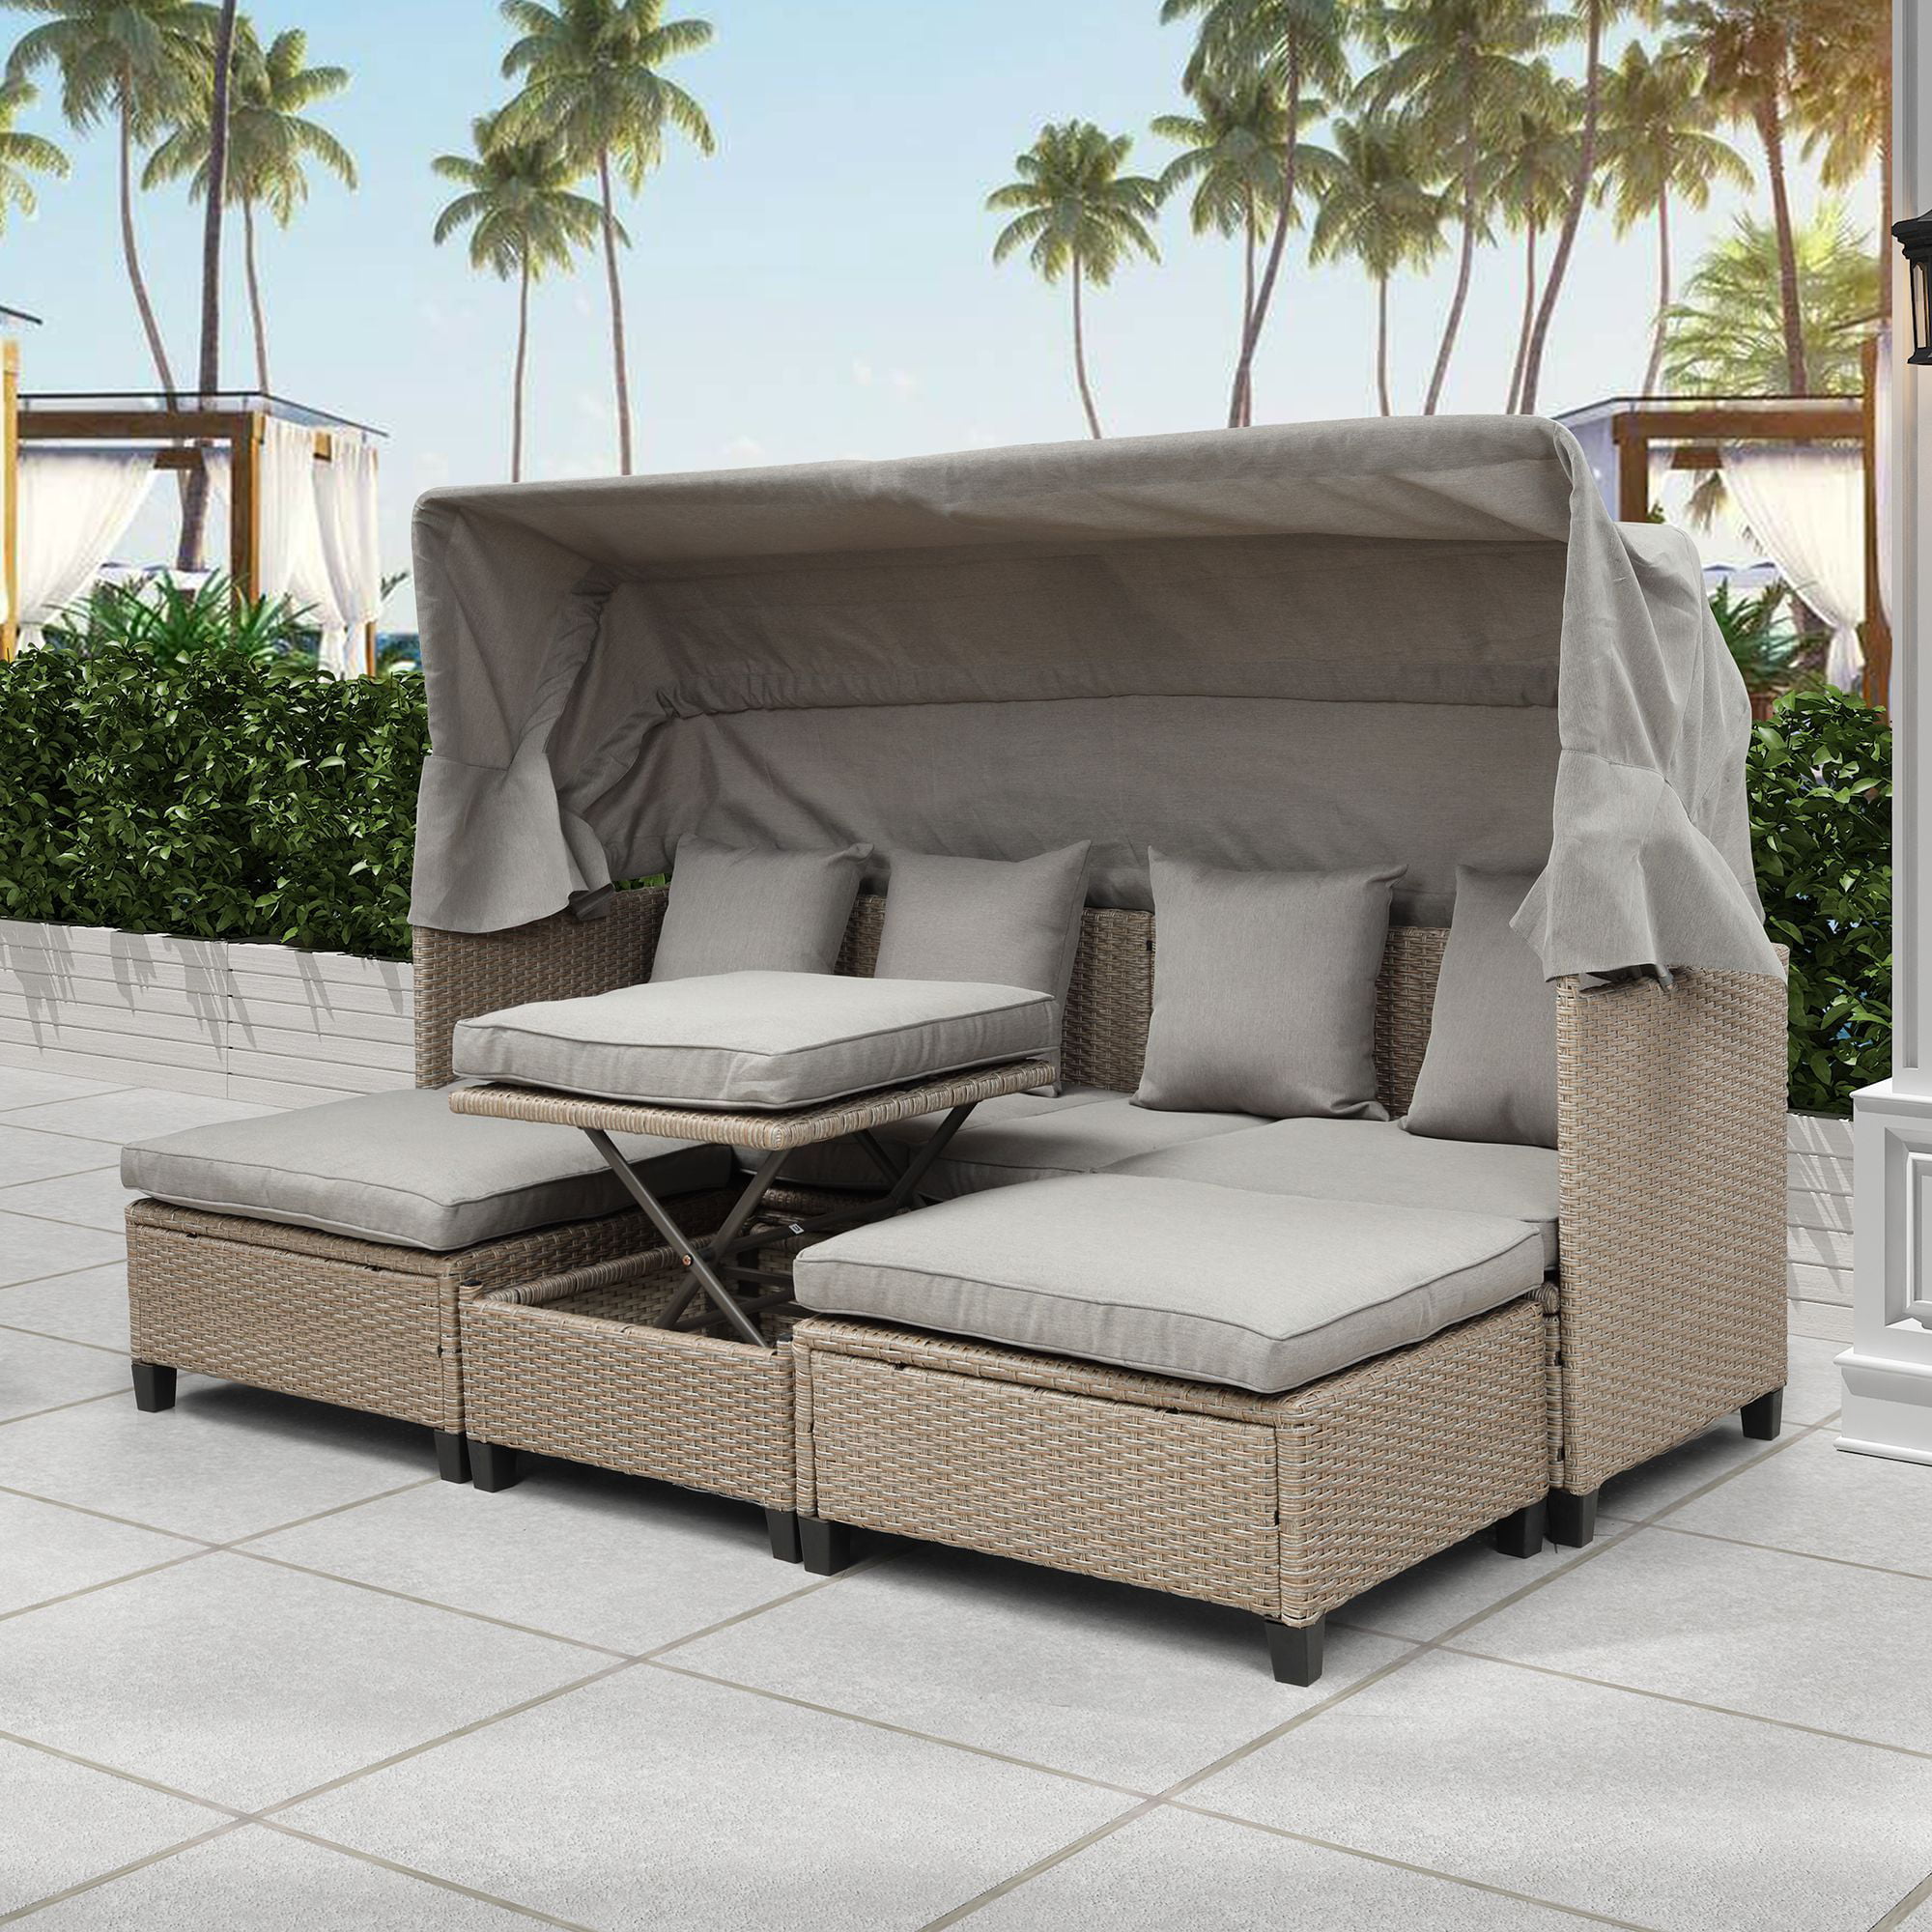 Patio Outdoor Sun Lounger Bed Rattan Wicker Brown Day Bed Sofa Garden US Stock N 